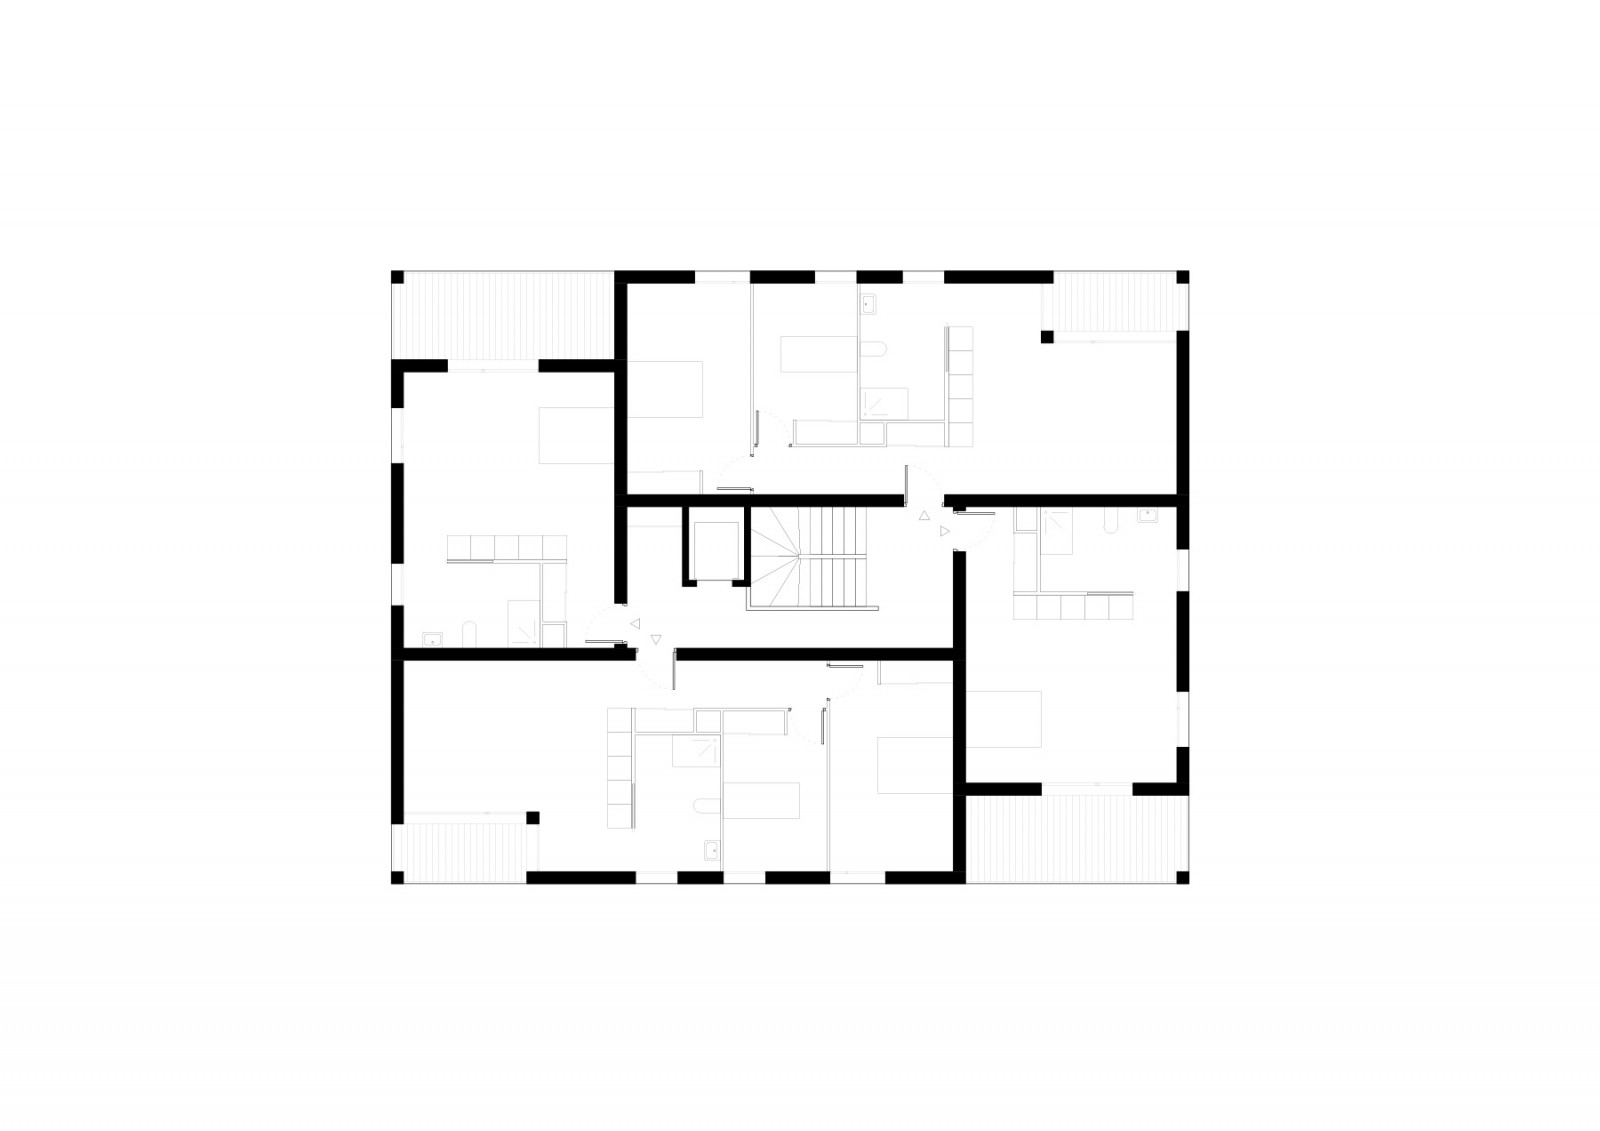 graam-sainte-barbe-02-residence-senior-plan-etage-type-1